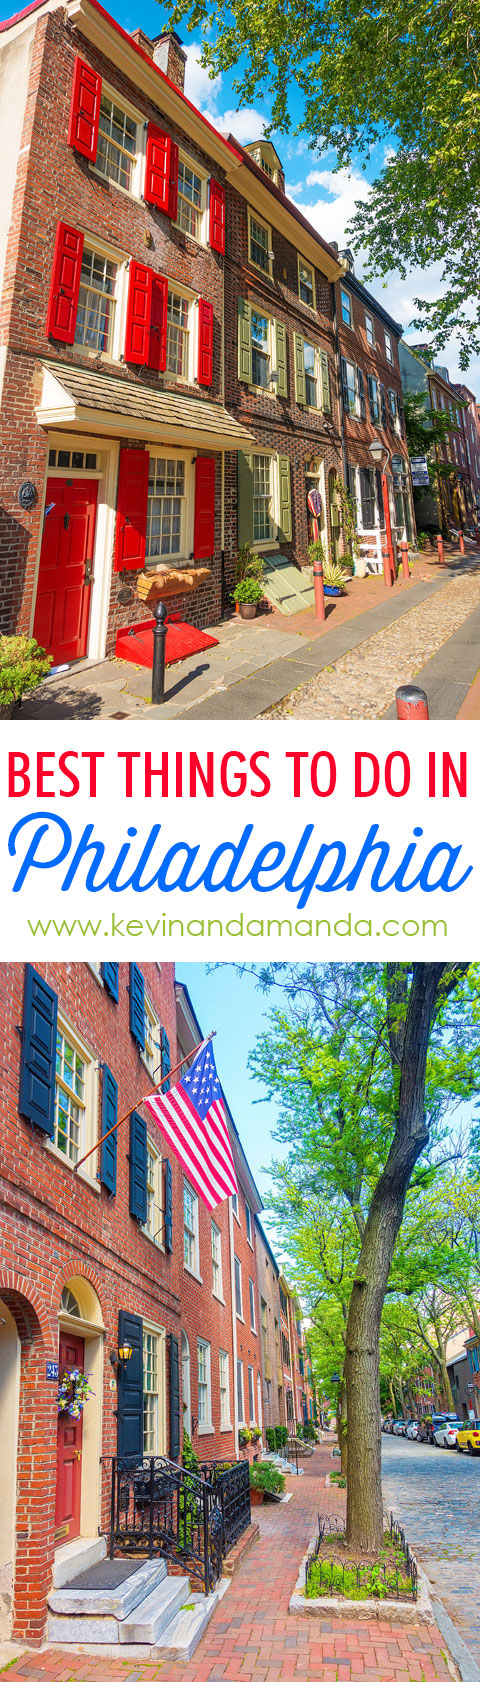 Things To Do in Philadelphia